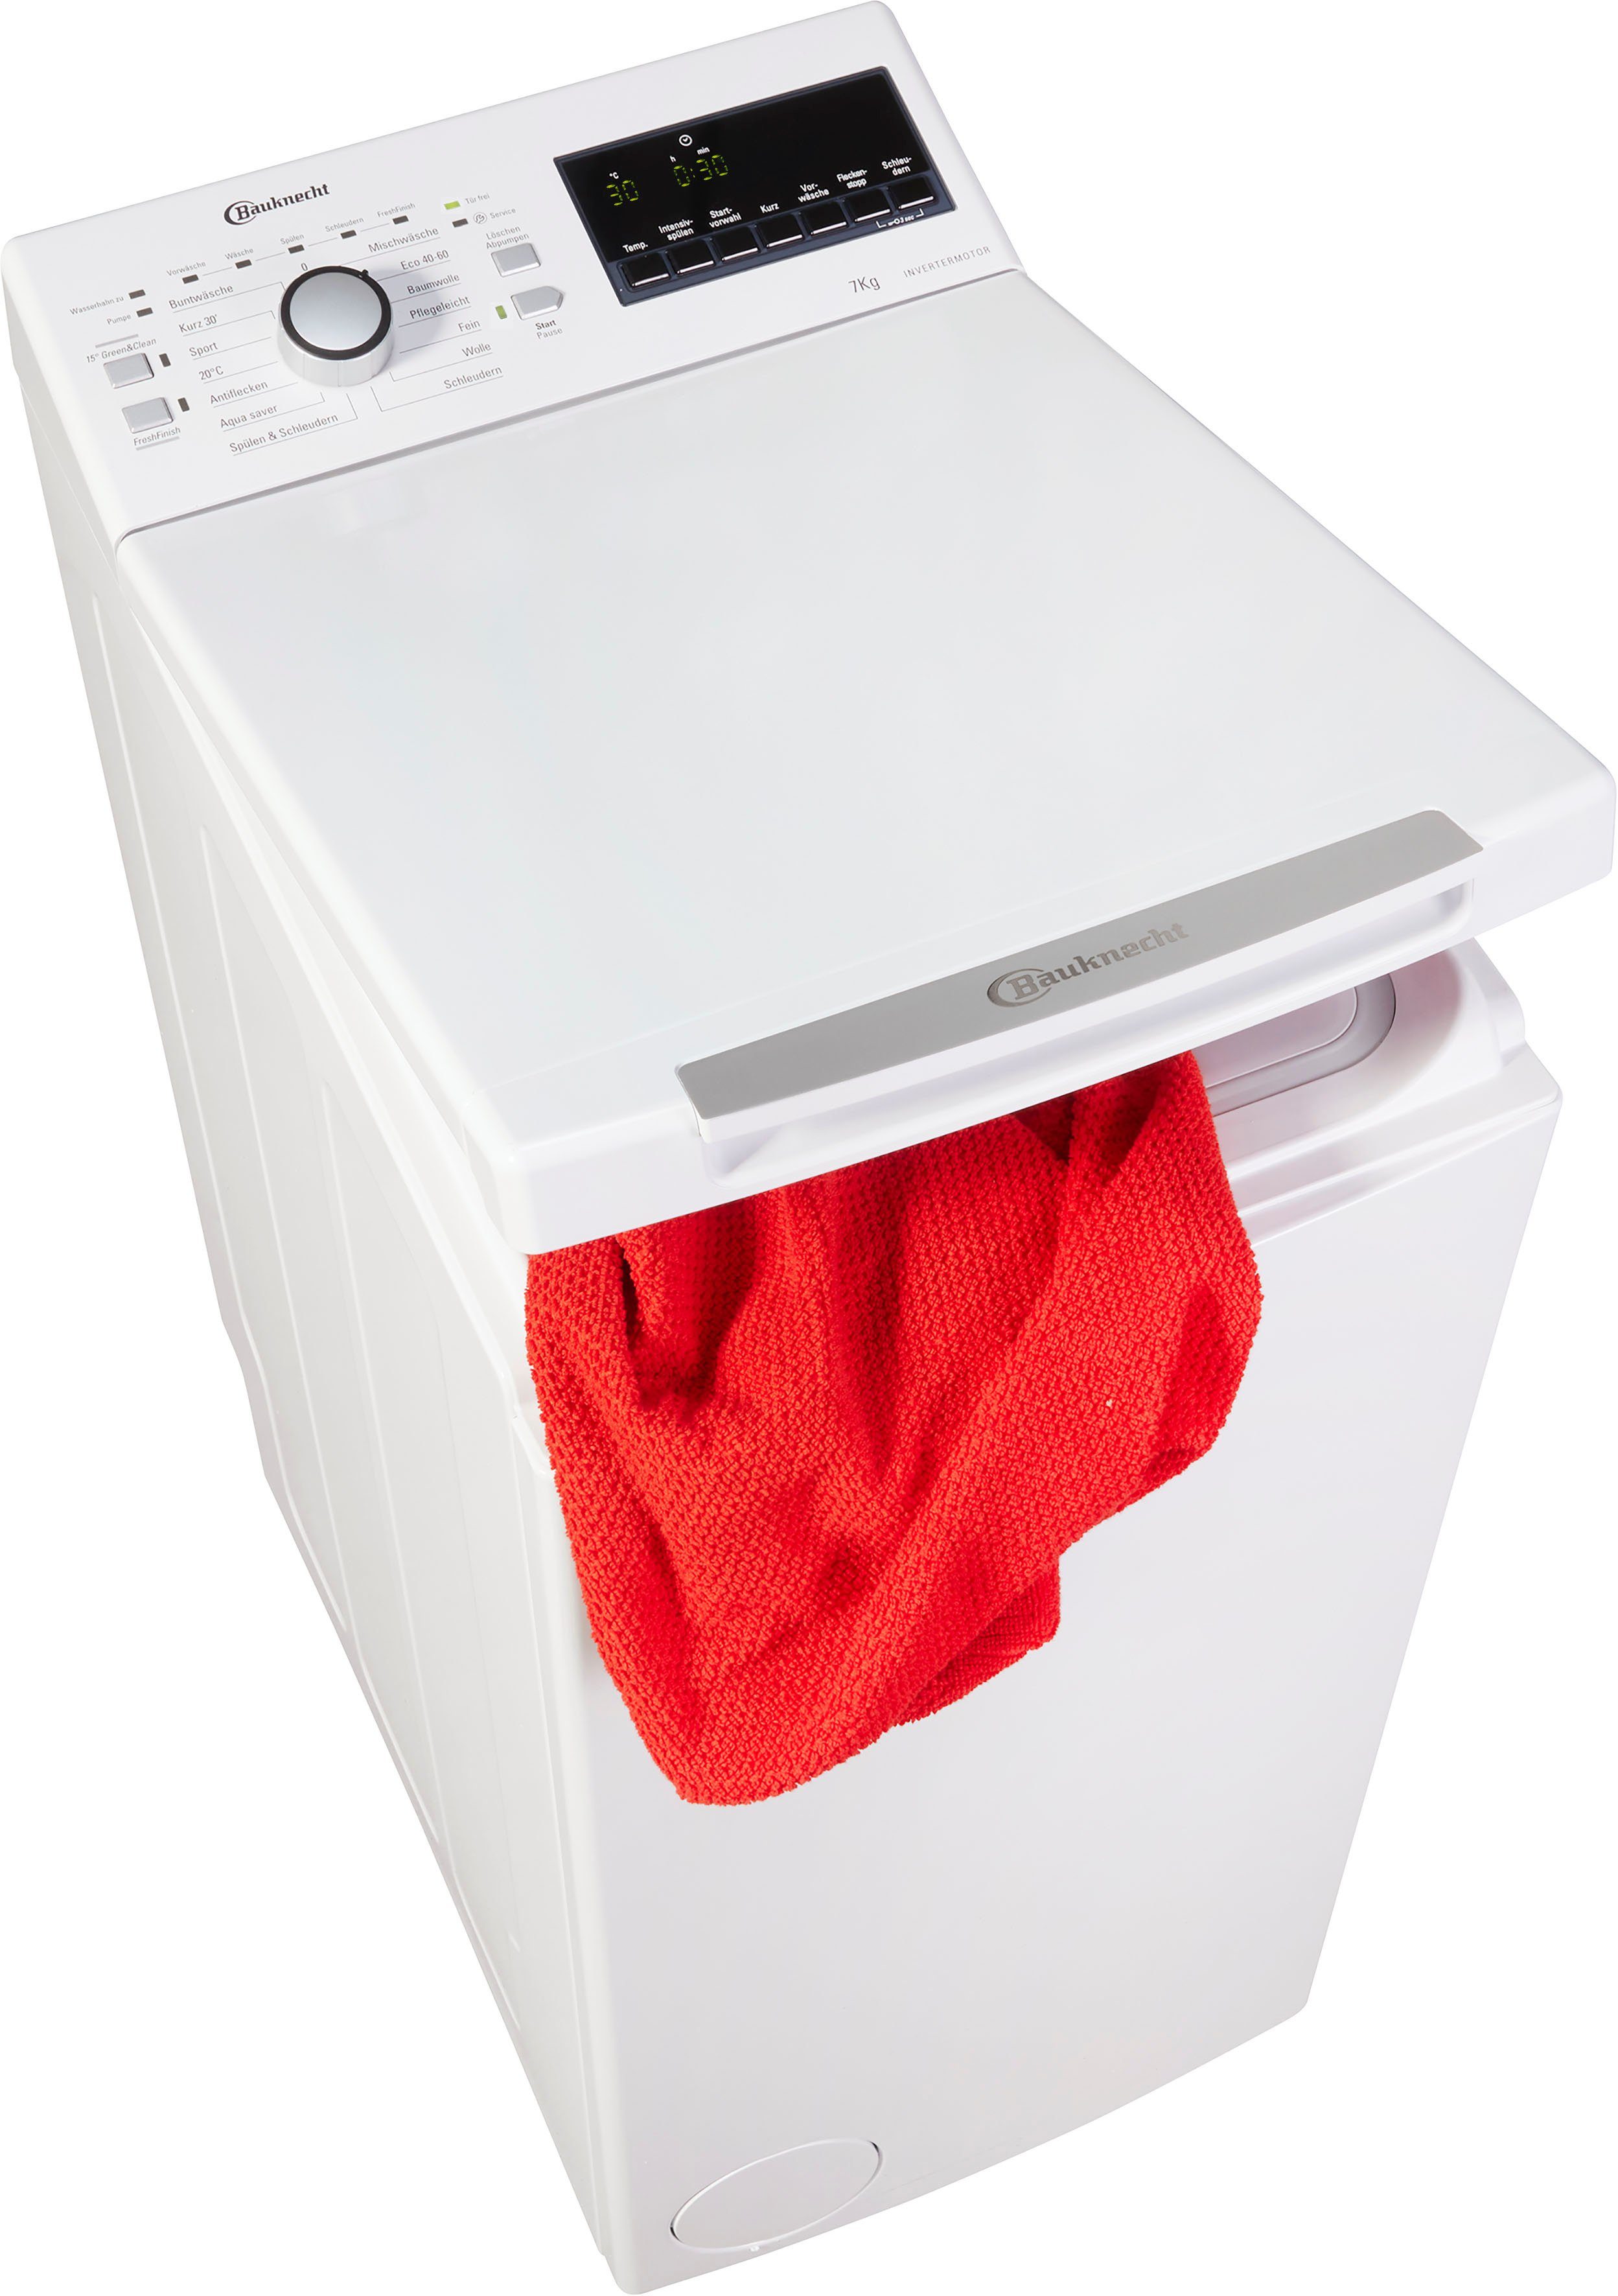 Top-Innovation BAUKNECHT Waschmaschine Toplader WAT 7 U/min kg, 712 B3, 1200 Eco